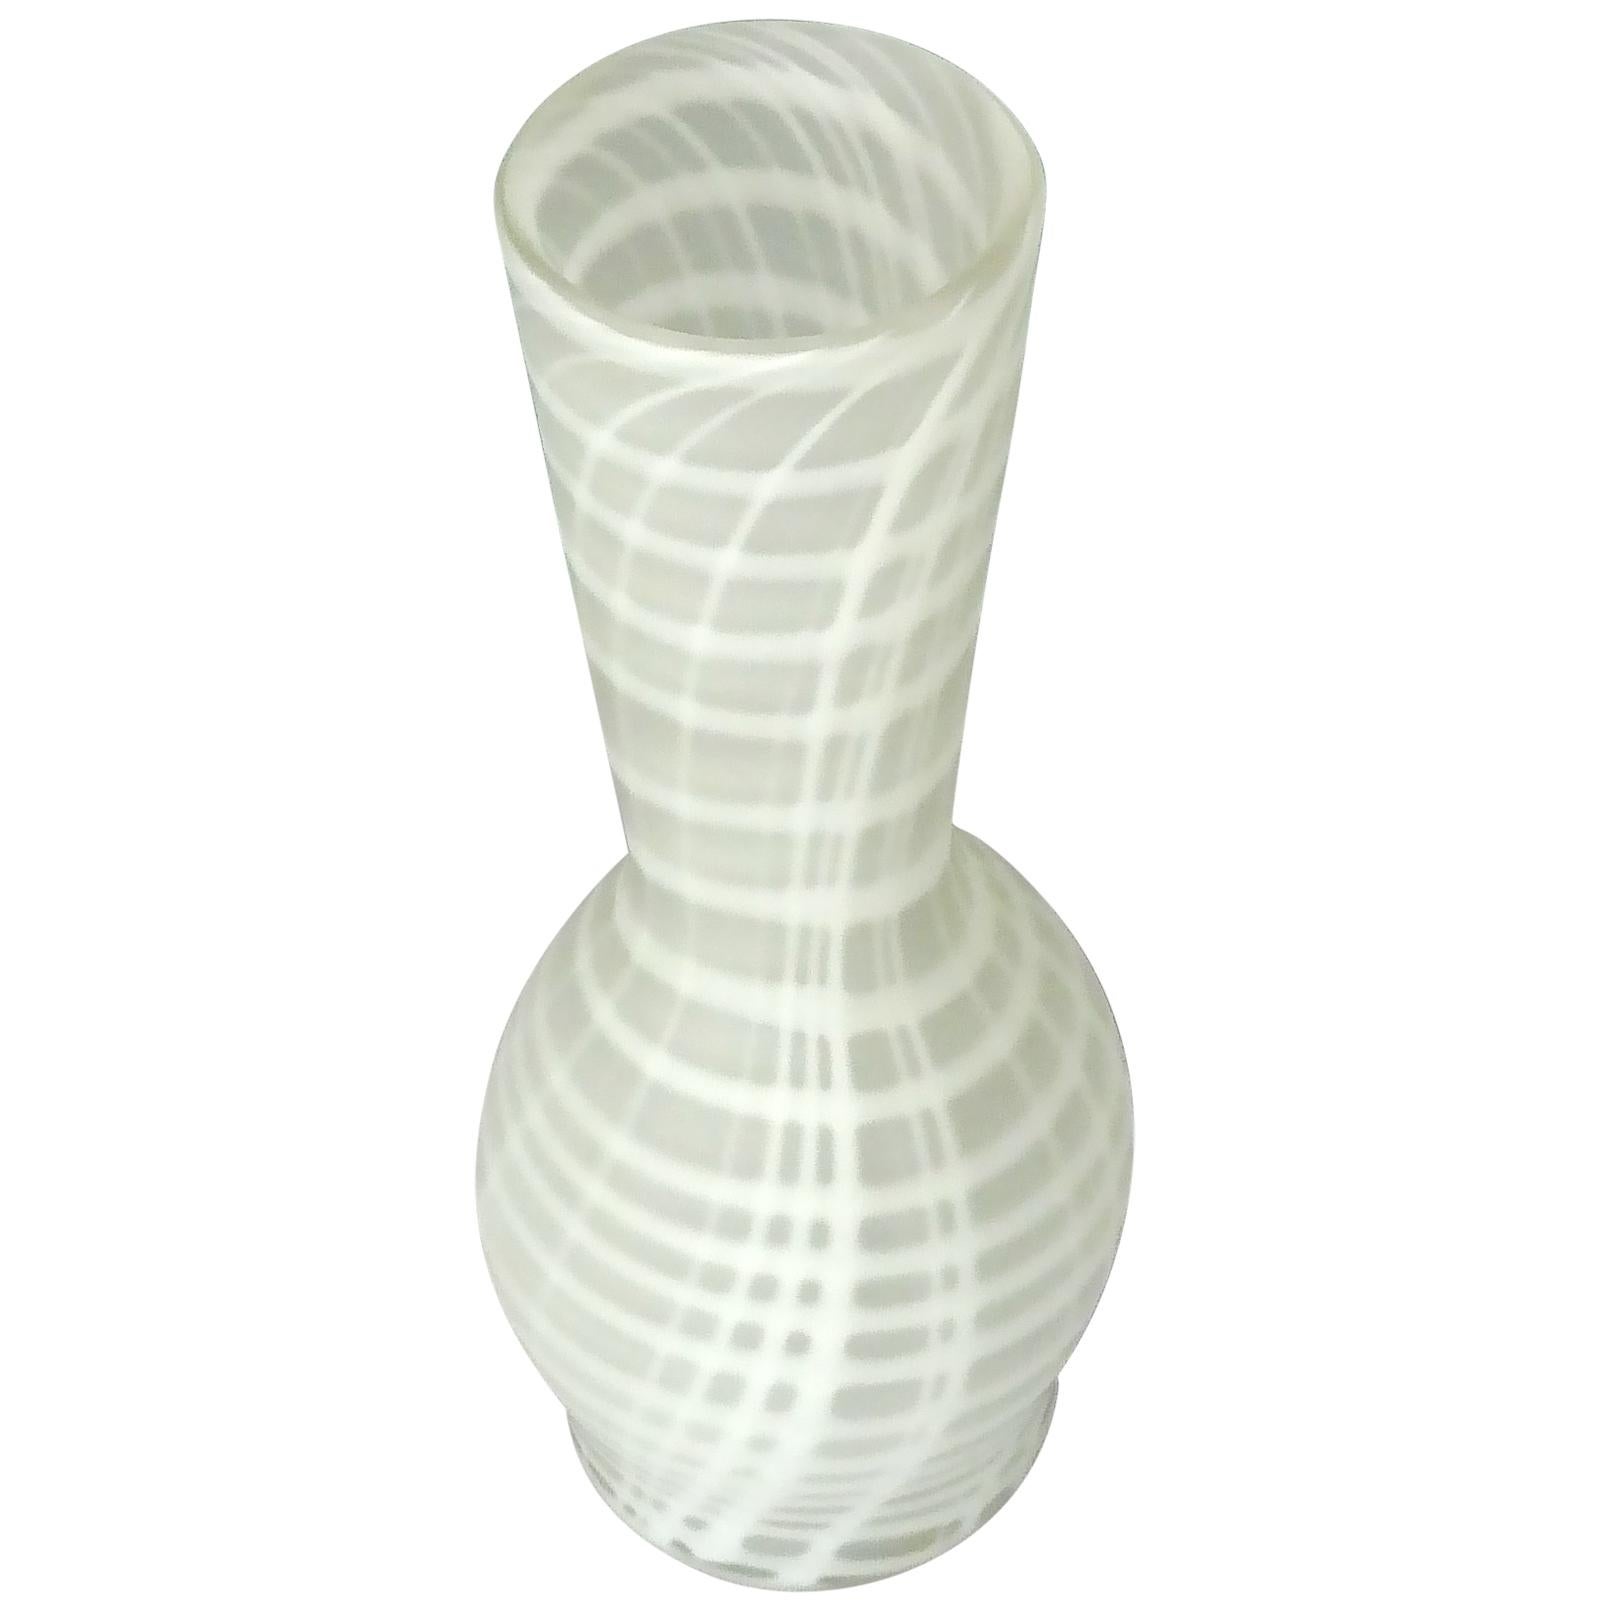 Signed Large Giuliano Tosi Art Glass Vase Satin White Stripes, Italy, 1970s